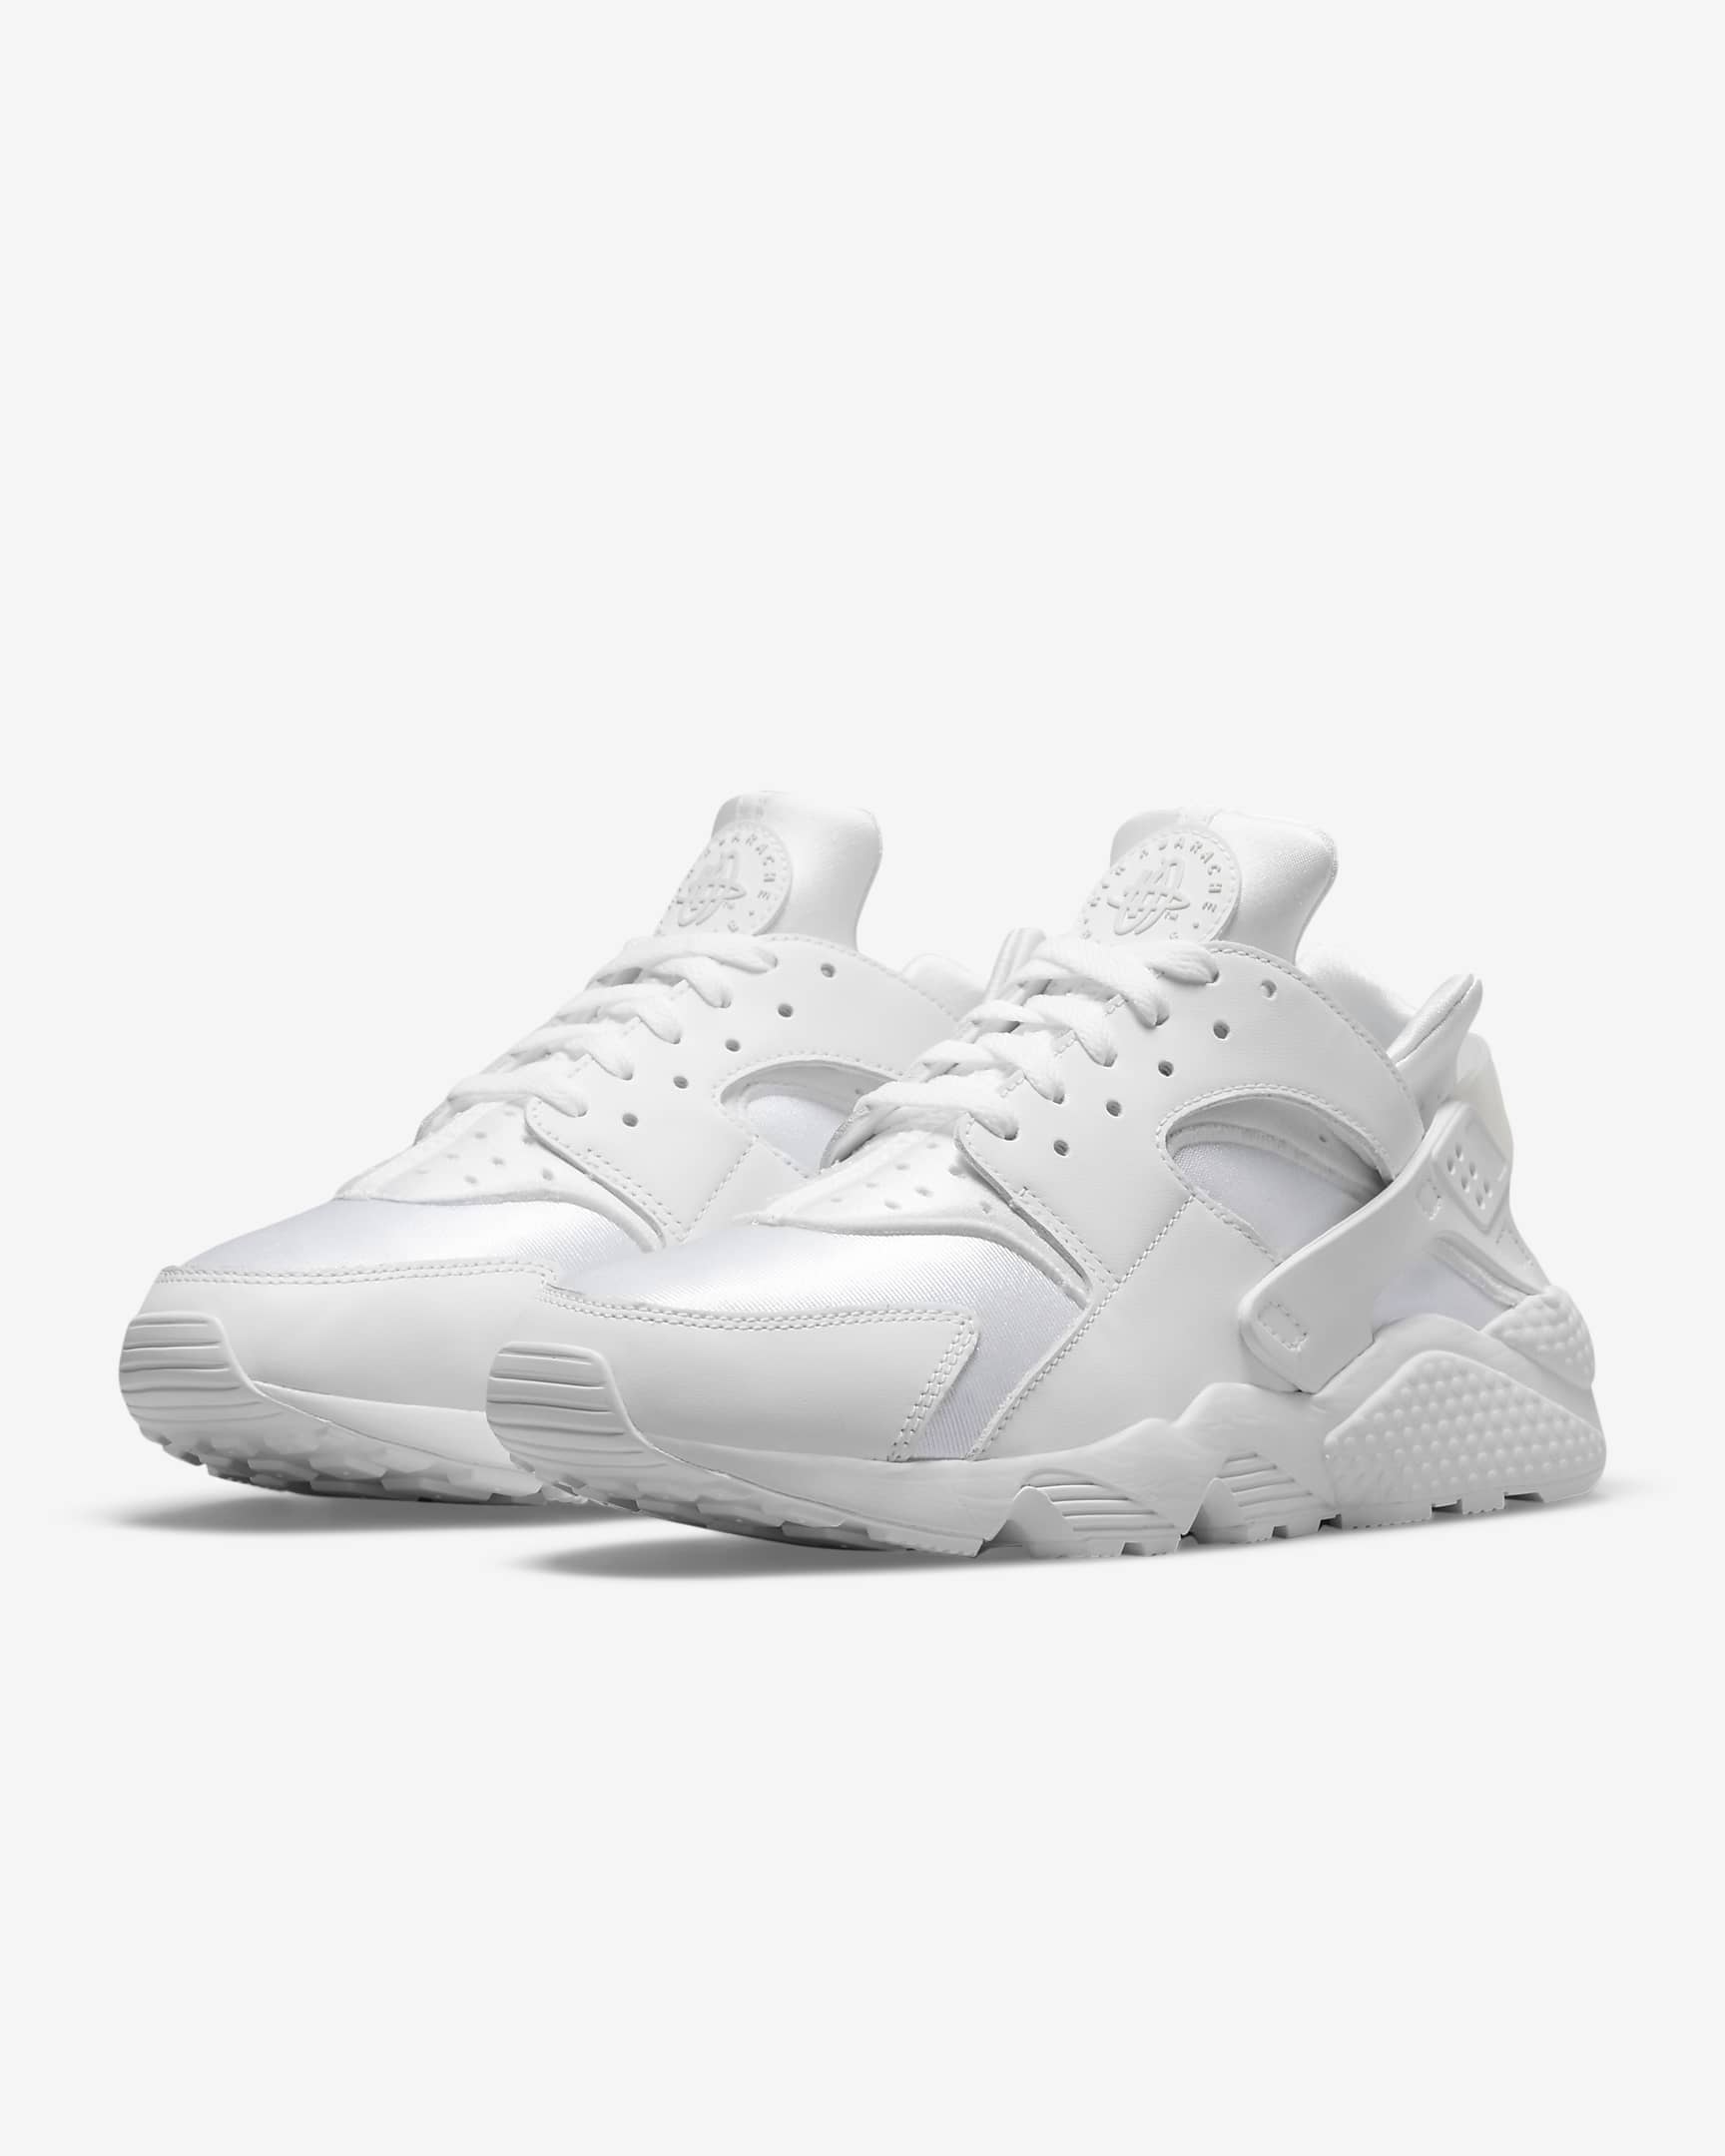 Nike Air Huarache Men's Shoes - White/Pure Platinum